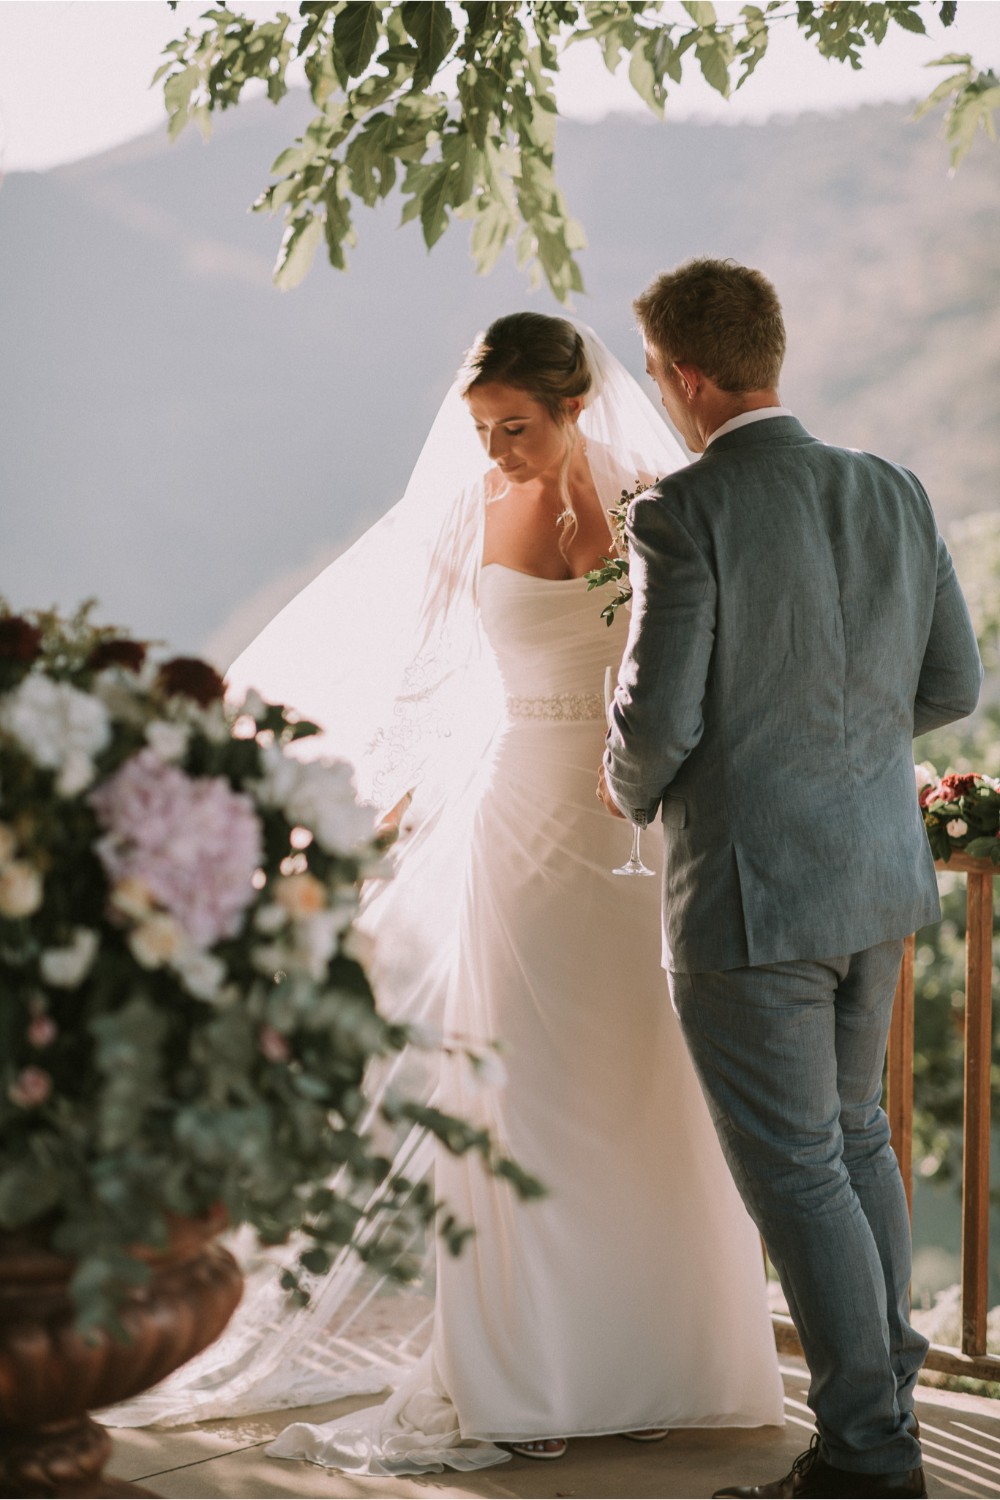 Newlyweds at wedding ceremony in botanical gardens in Crete, Greece